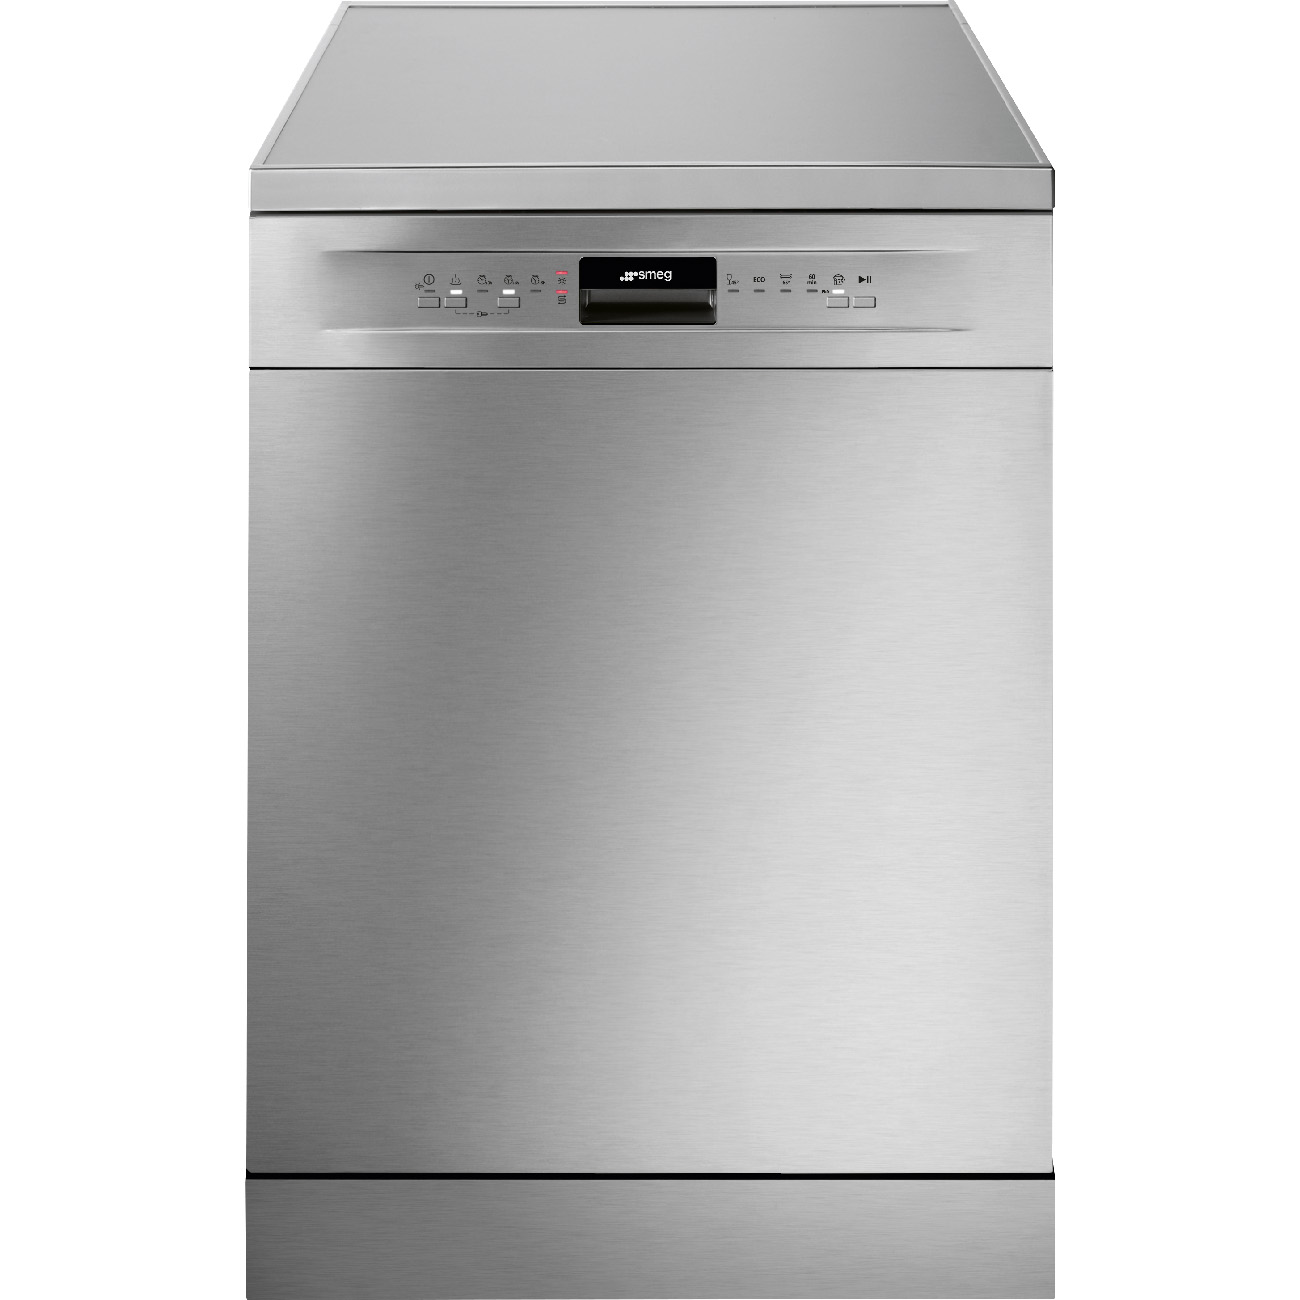 Free-standing dishwasher 60 cm Smeg_1